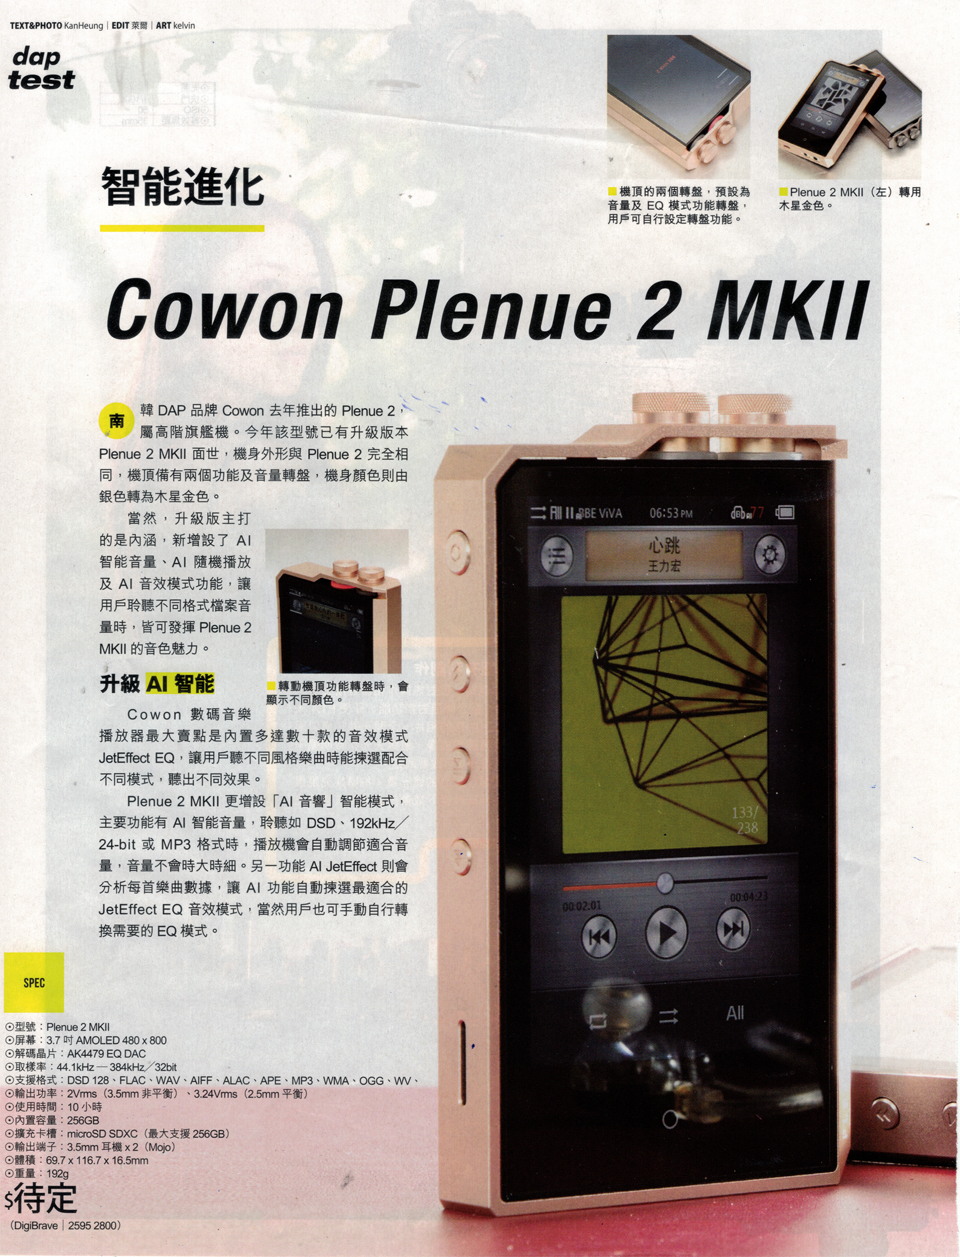 COWON PLENUE 2 MARK II智能進化-eZONE第1019期COWON香港/台灣官方網站